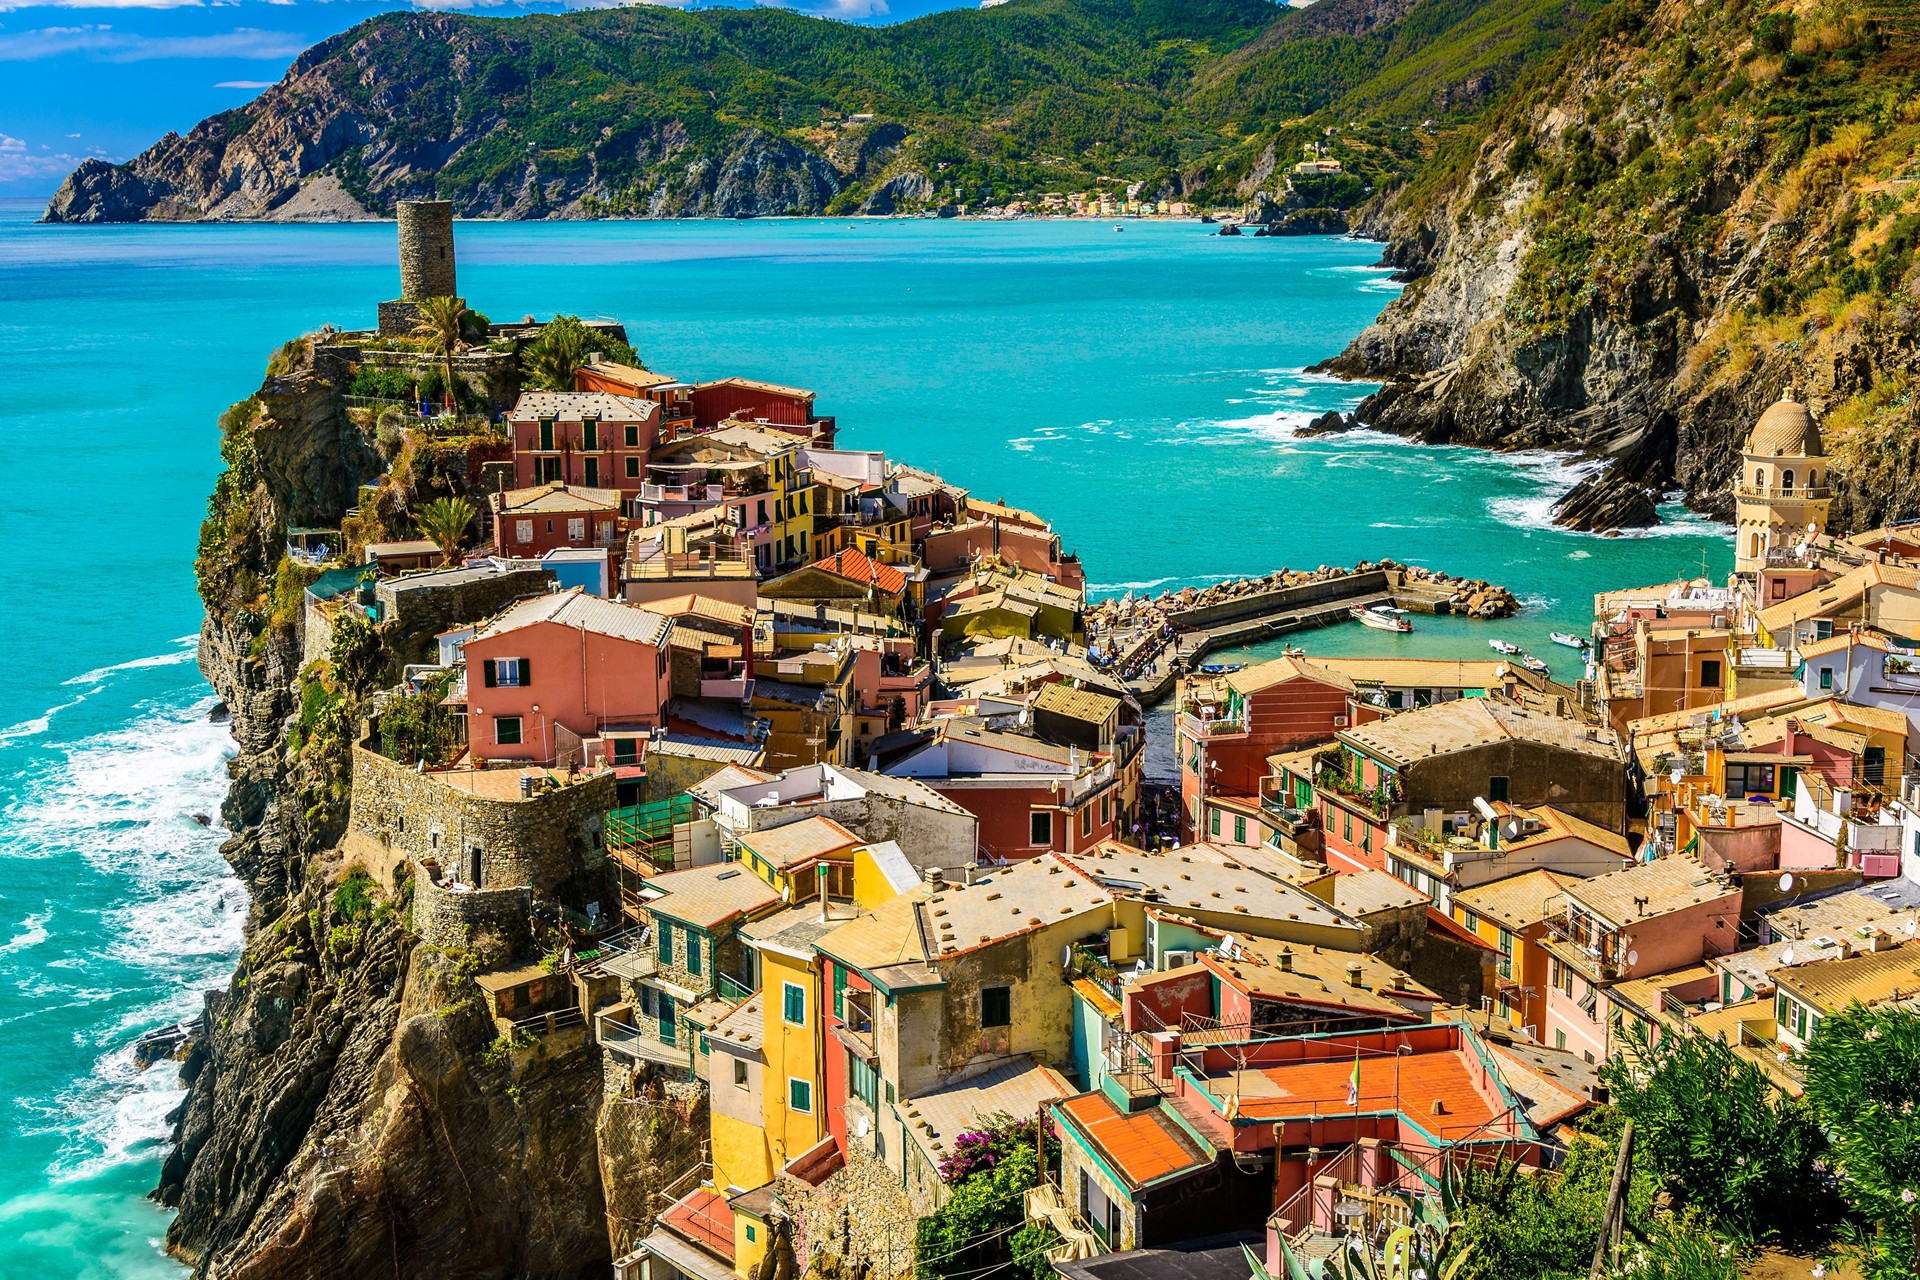 Vakantie Cinque Terre - Fotogenieke vakantie in Italië | TUI